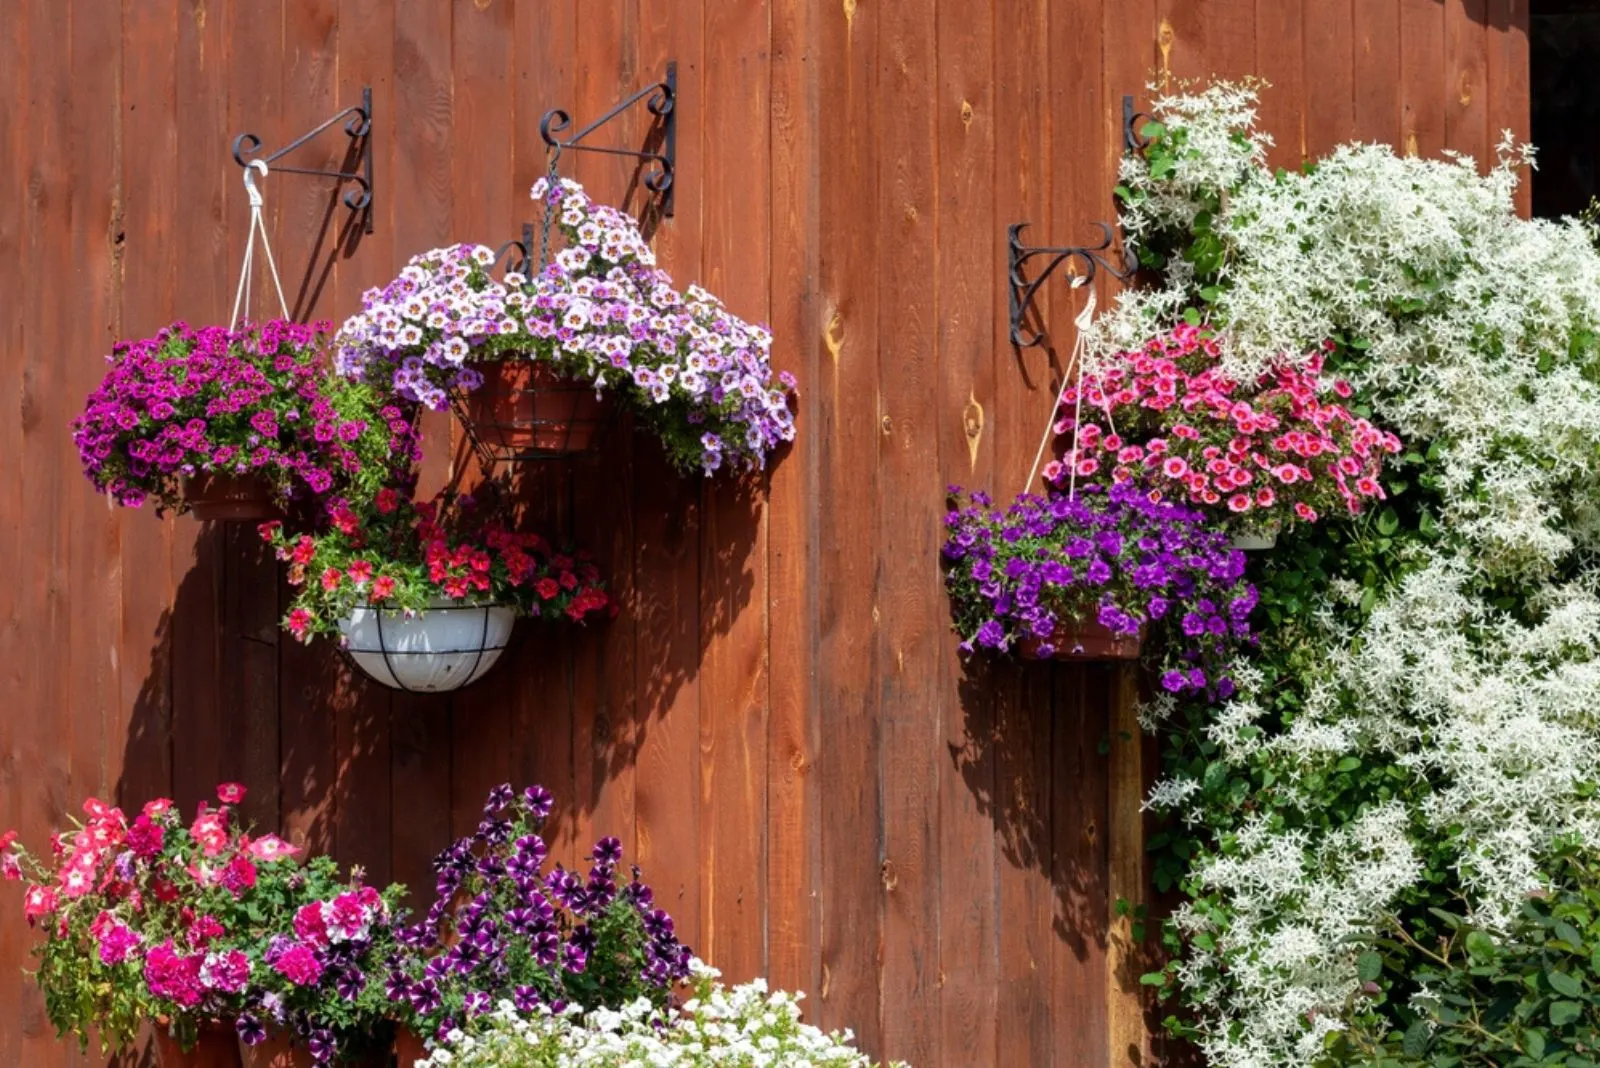 a few pots of petunias in hanging pots outdoor